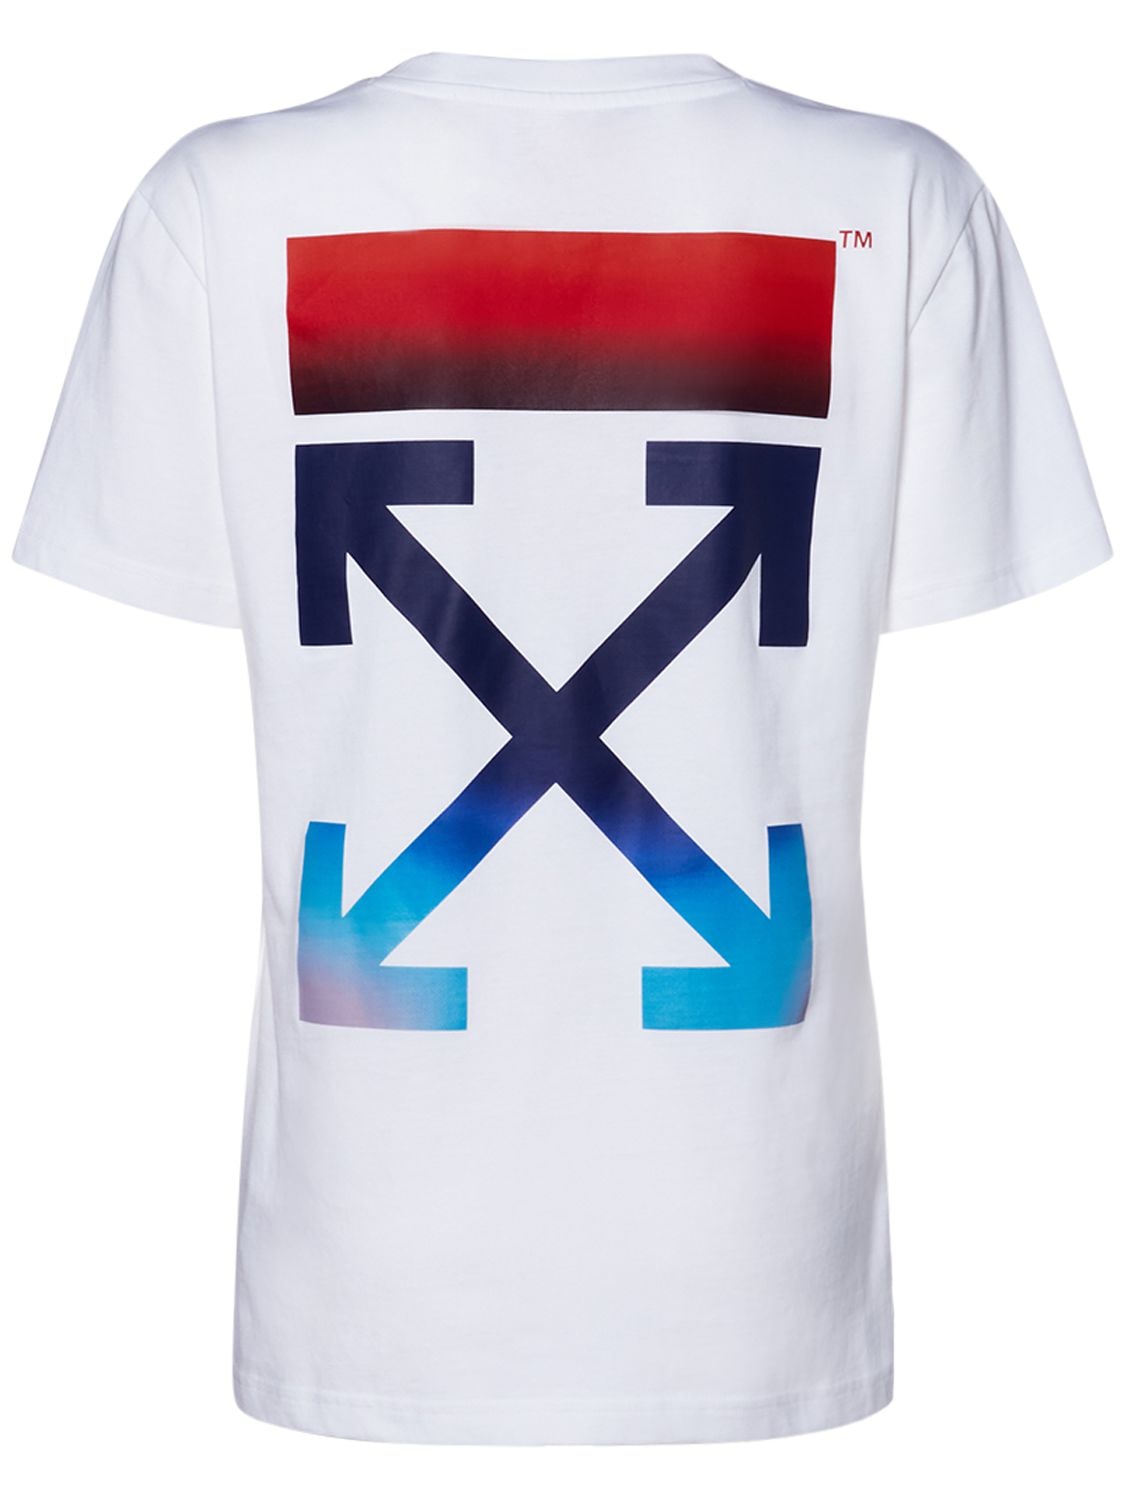 OFF-WHITE Blurred Arrow Logo Cotton Jersey T-shirt